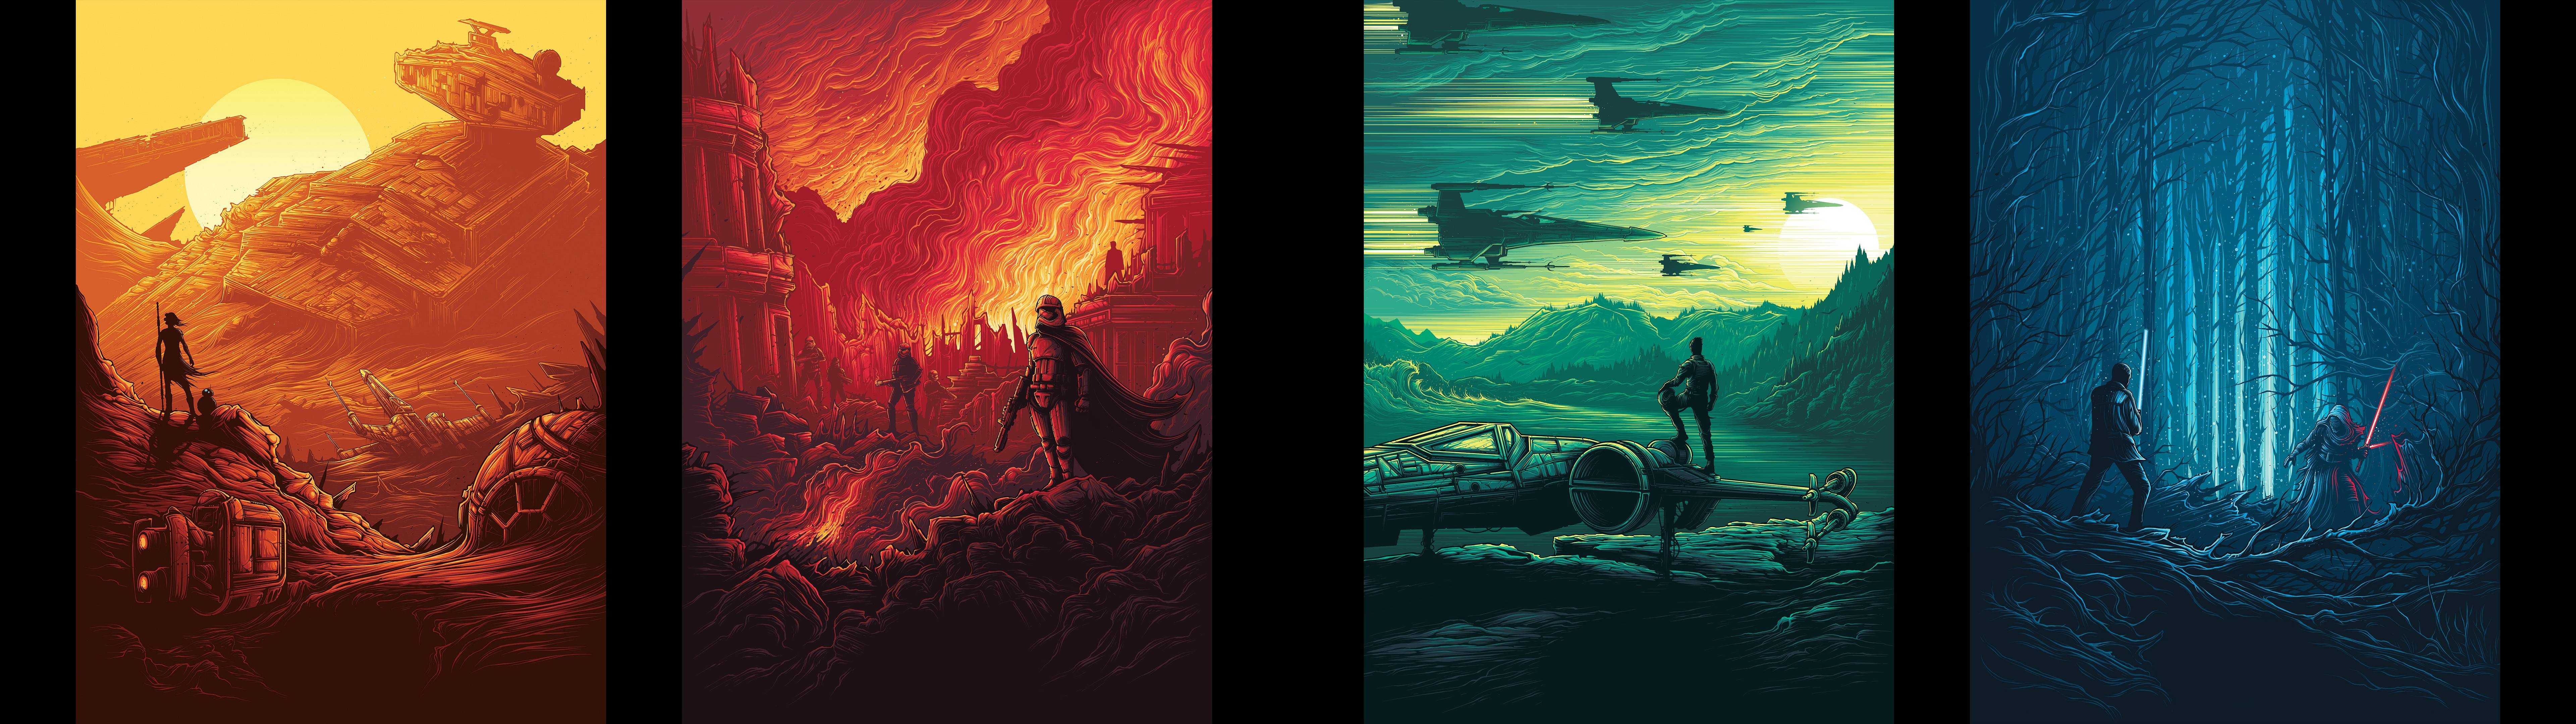 Star Wars Dual Screen Wallpapers - Top Free Star Wars Dual Screen